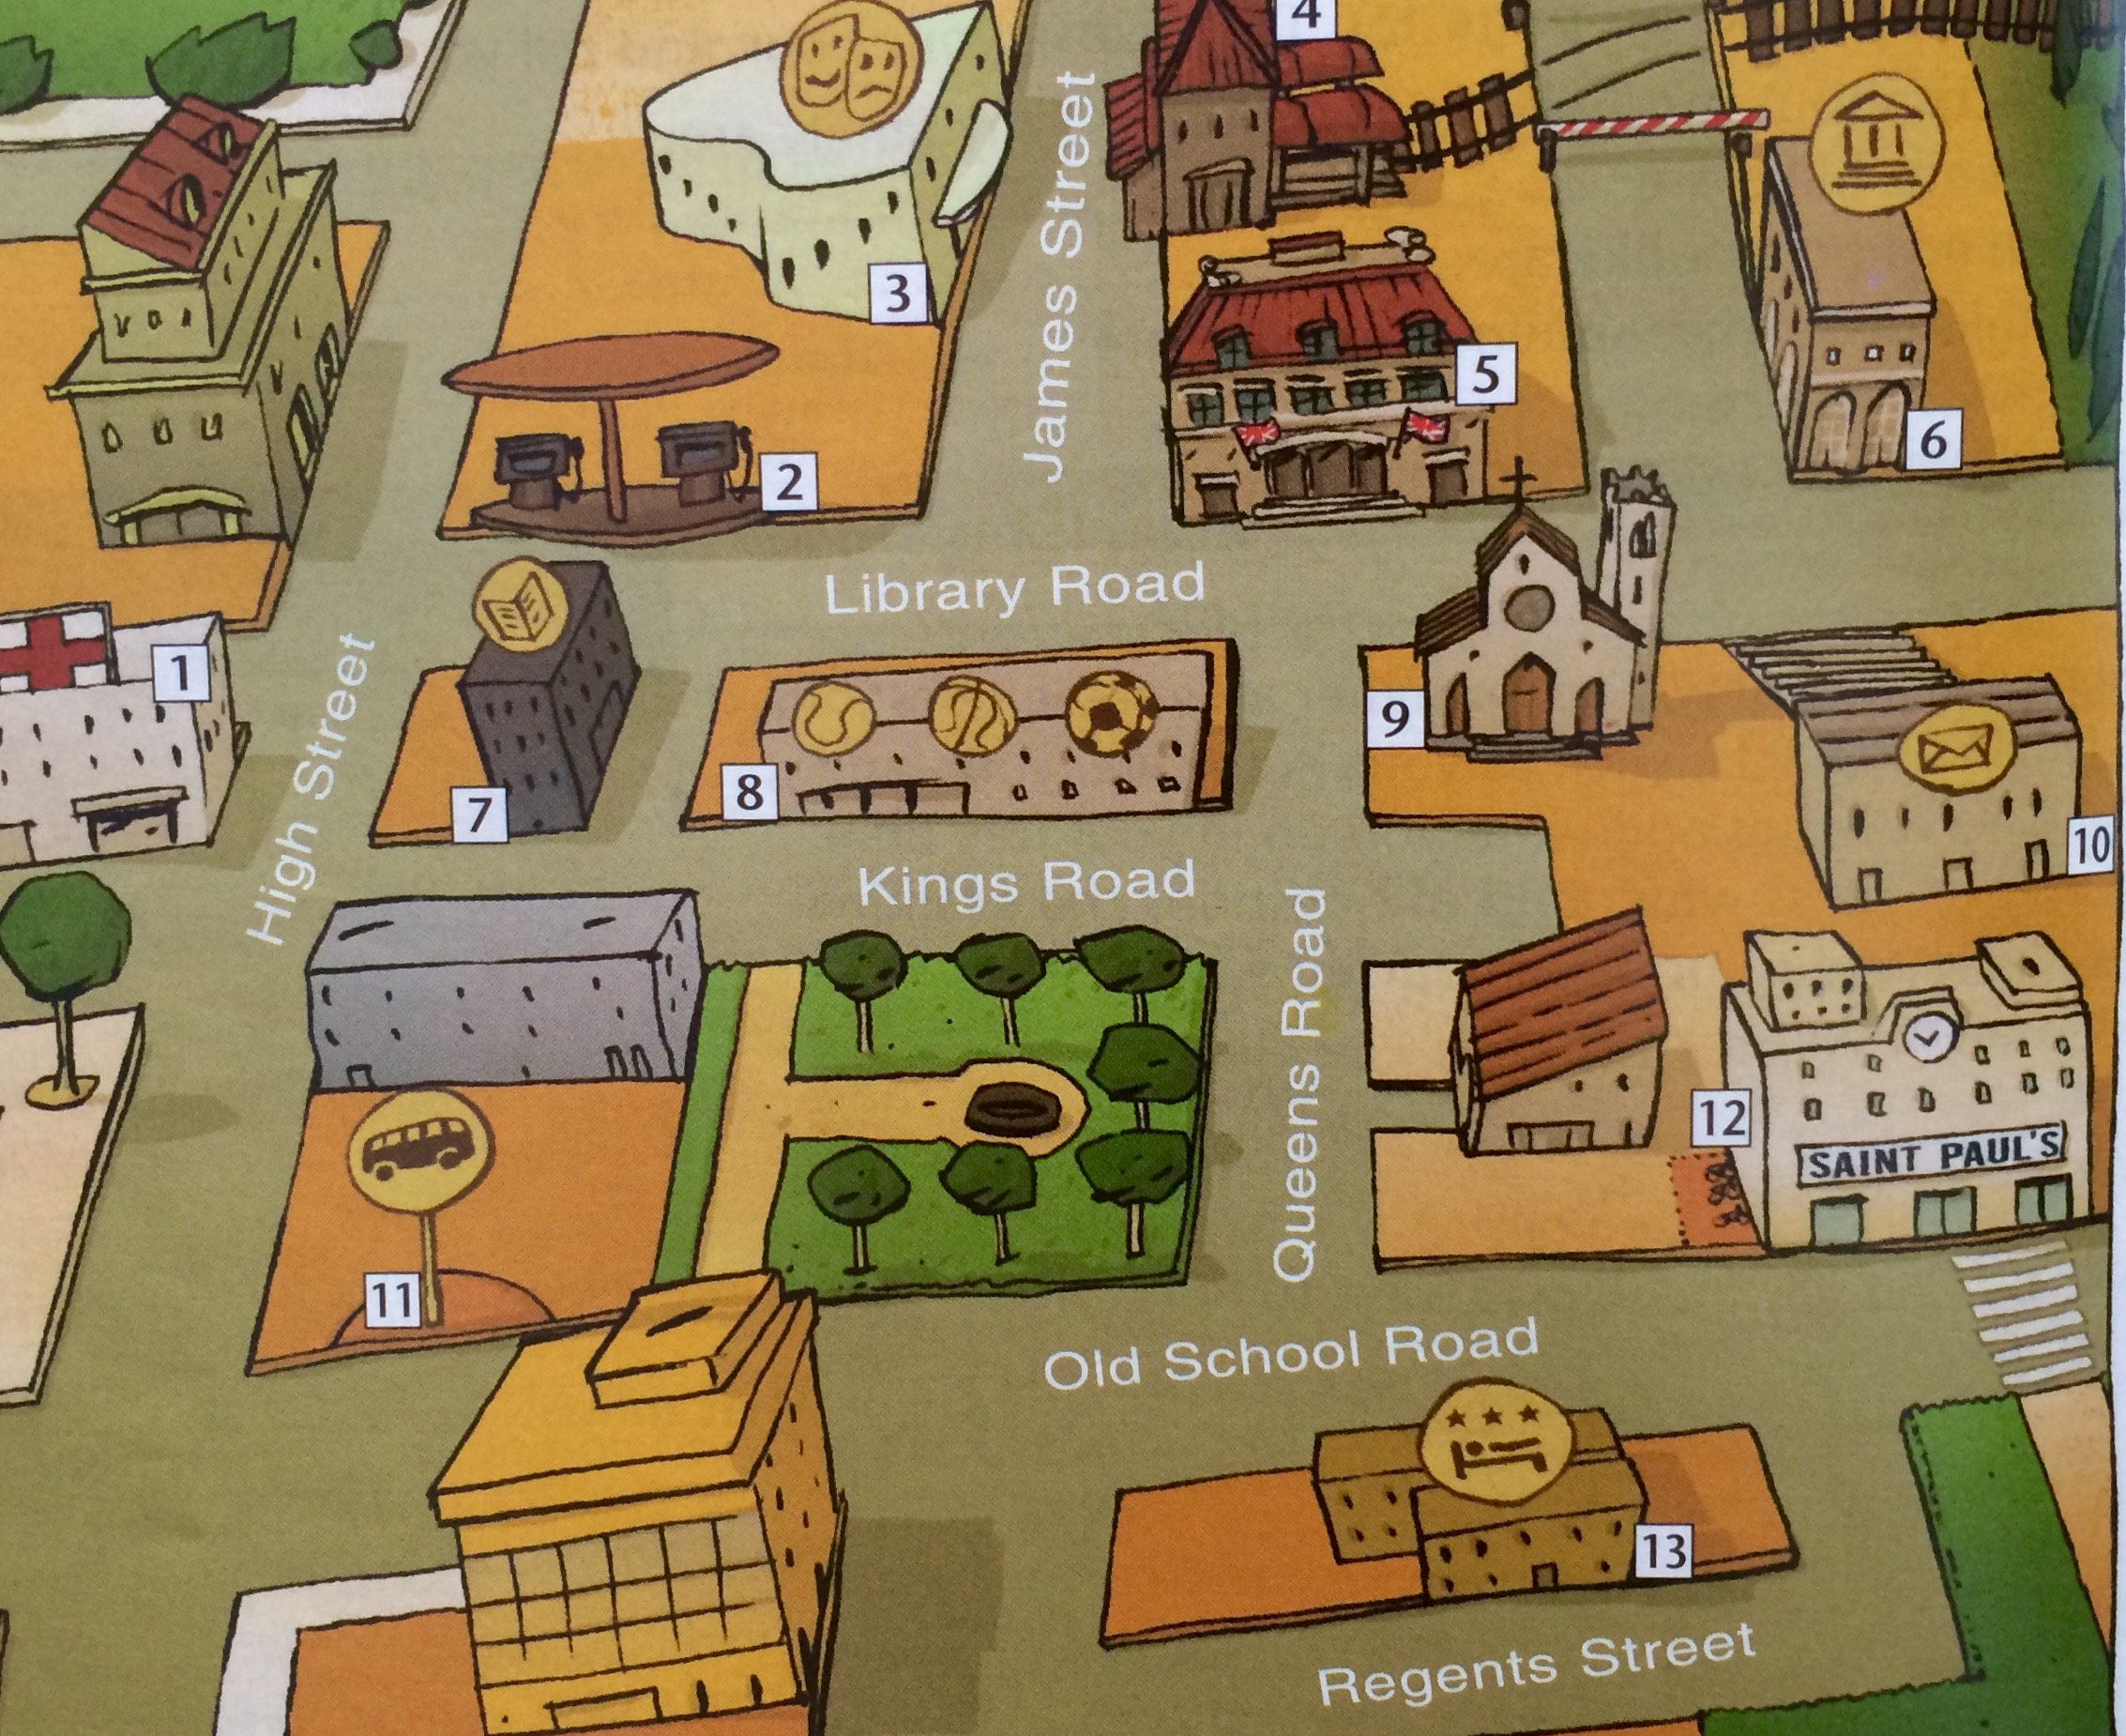 How many town. План города на английском. План города для детей. Карта города для детей. Нарисованная карта города.